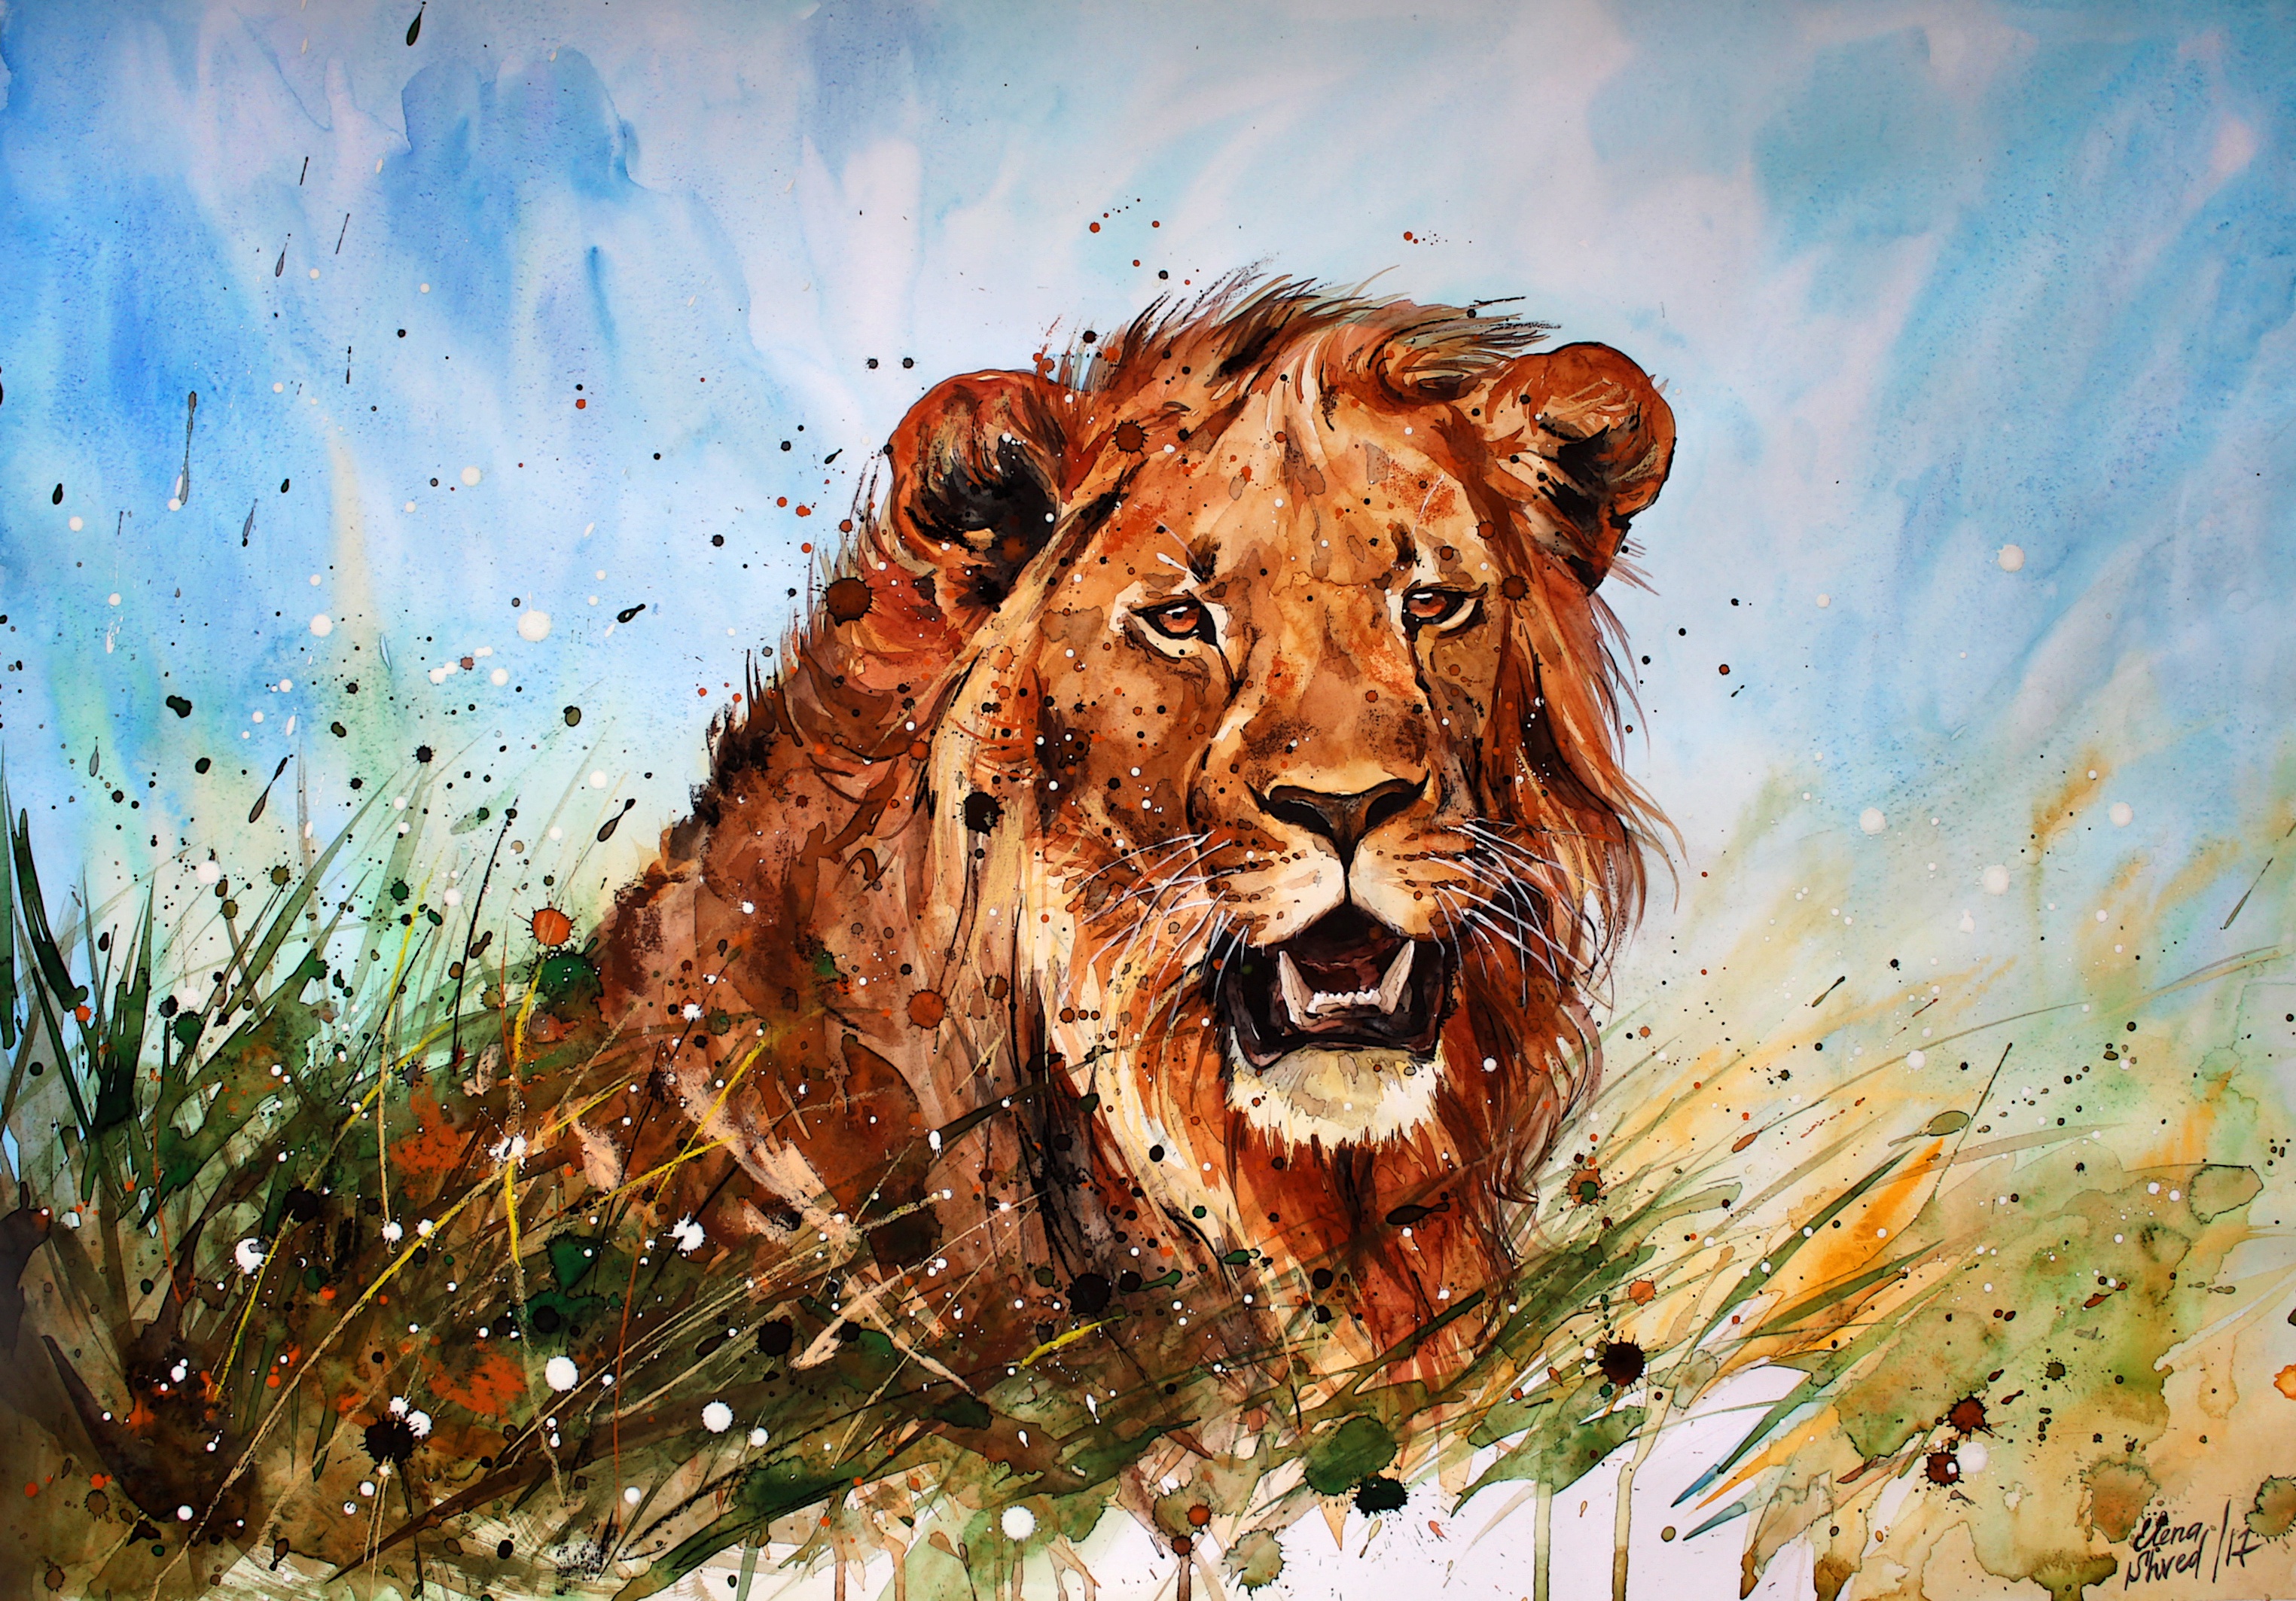 Big Cat Lion Painting Watercolor Wildlife Predator Animal 3049x2126